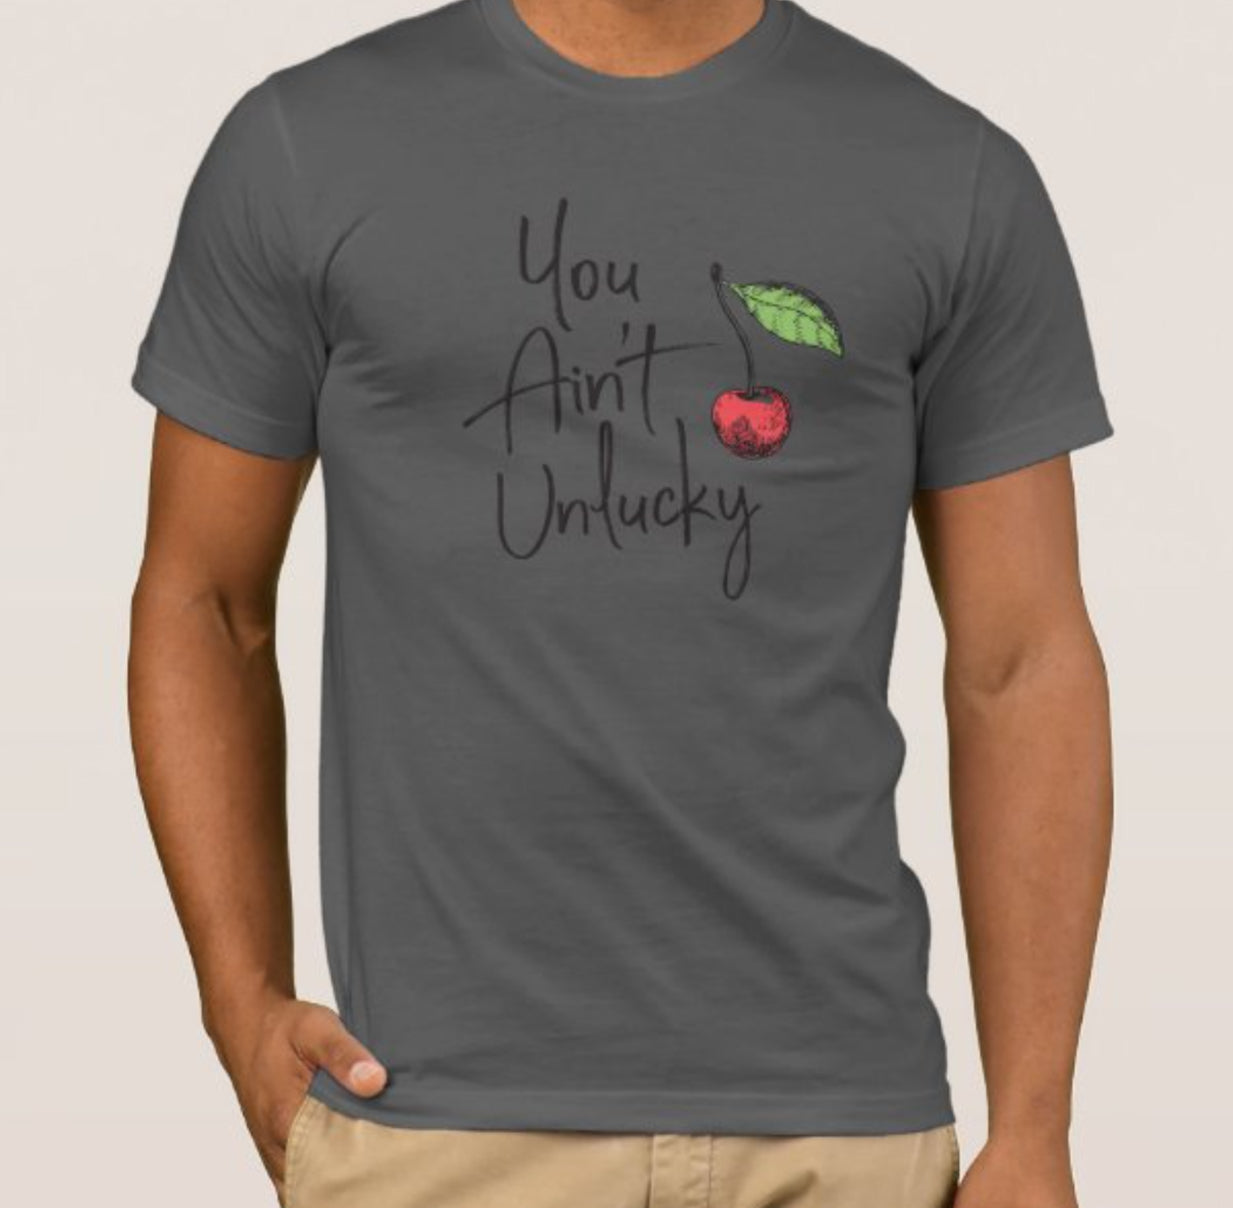 "You Ain't Unlucky" T-Shirt (Grey)